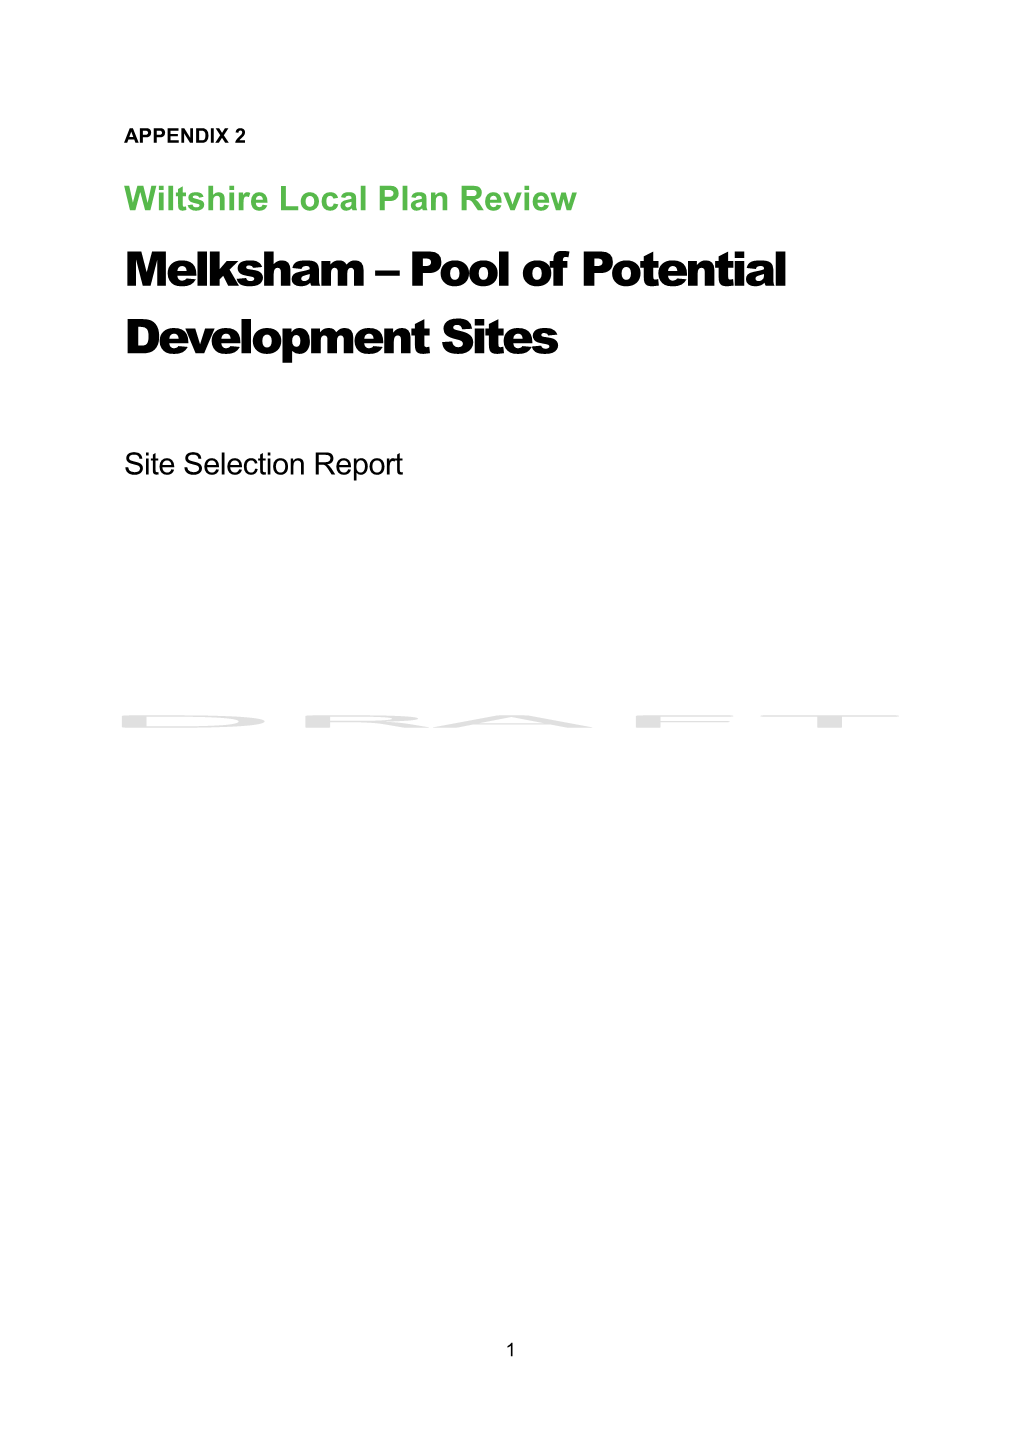 Melksham – Pool of Potential Development Sites